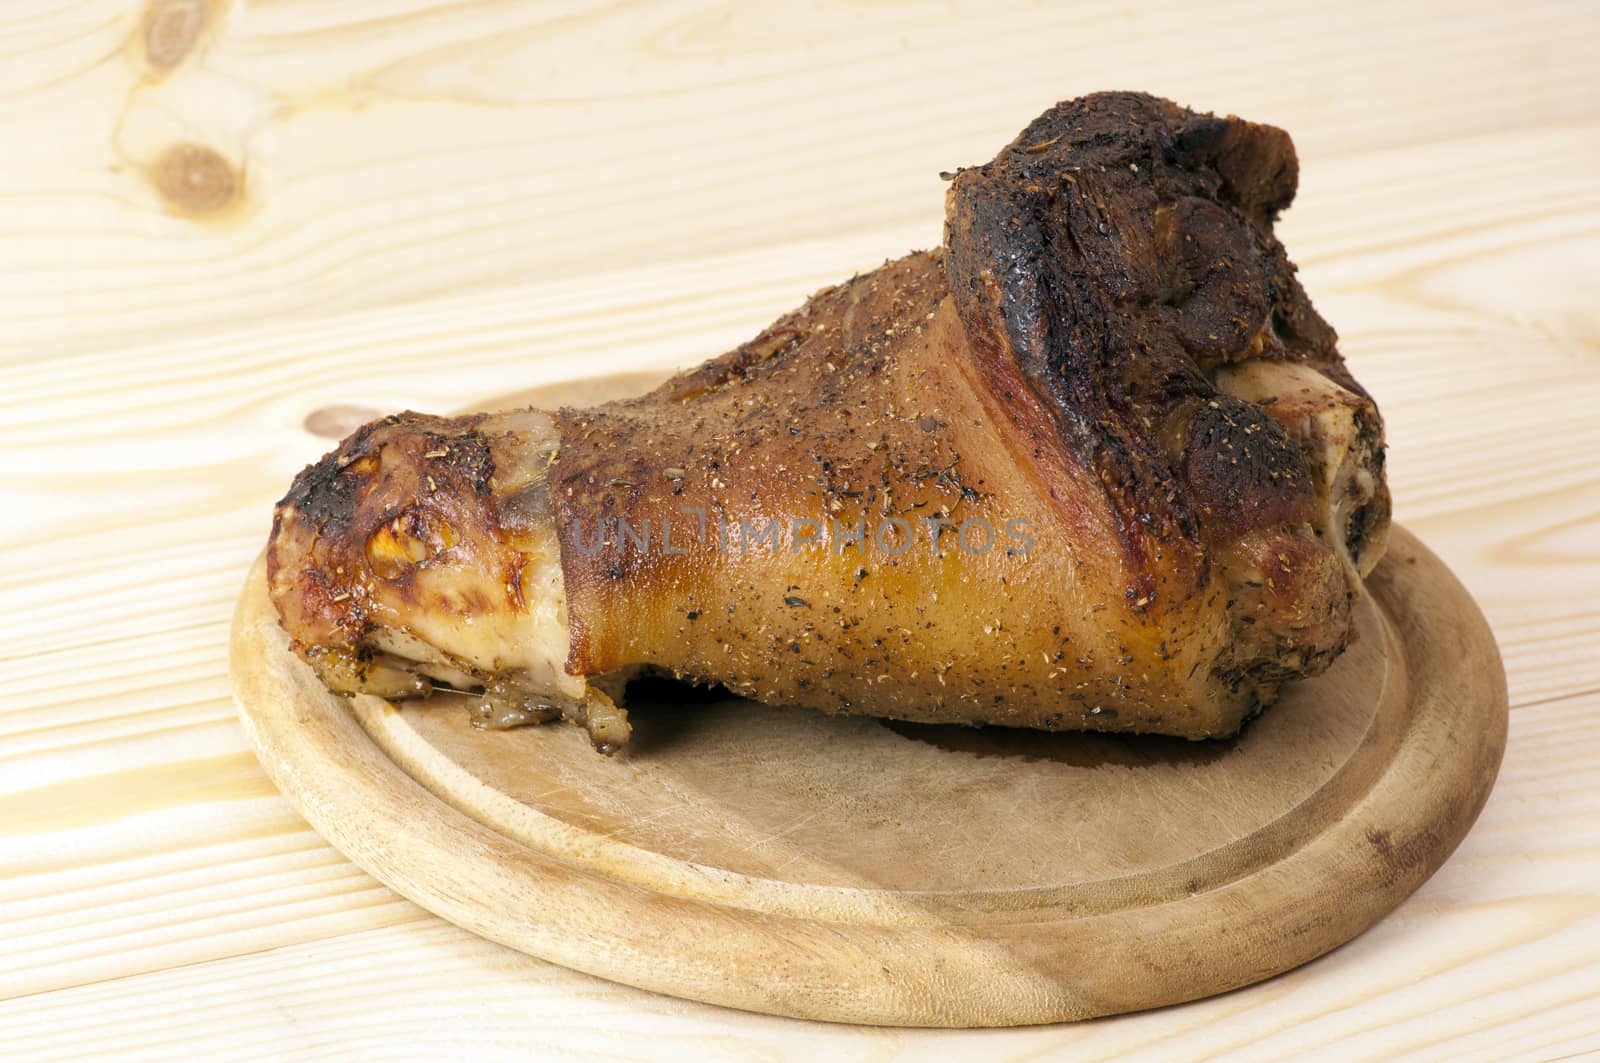 Roasted pork leg (rulka, veprove koleno) by dred